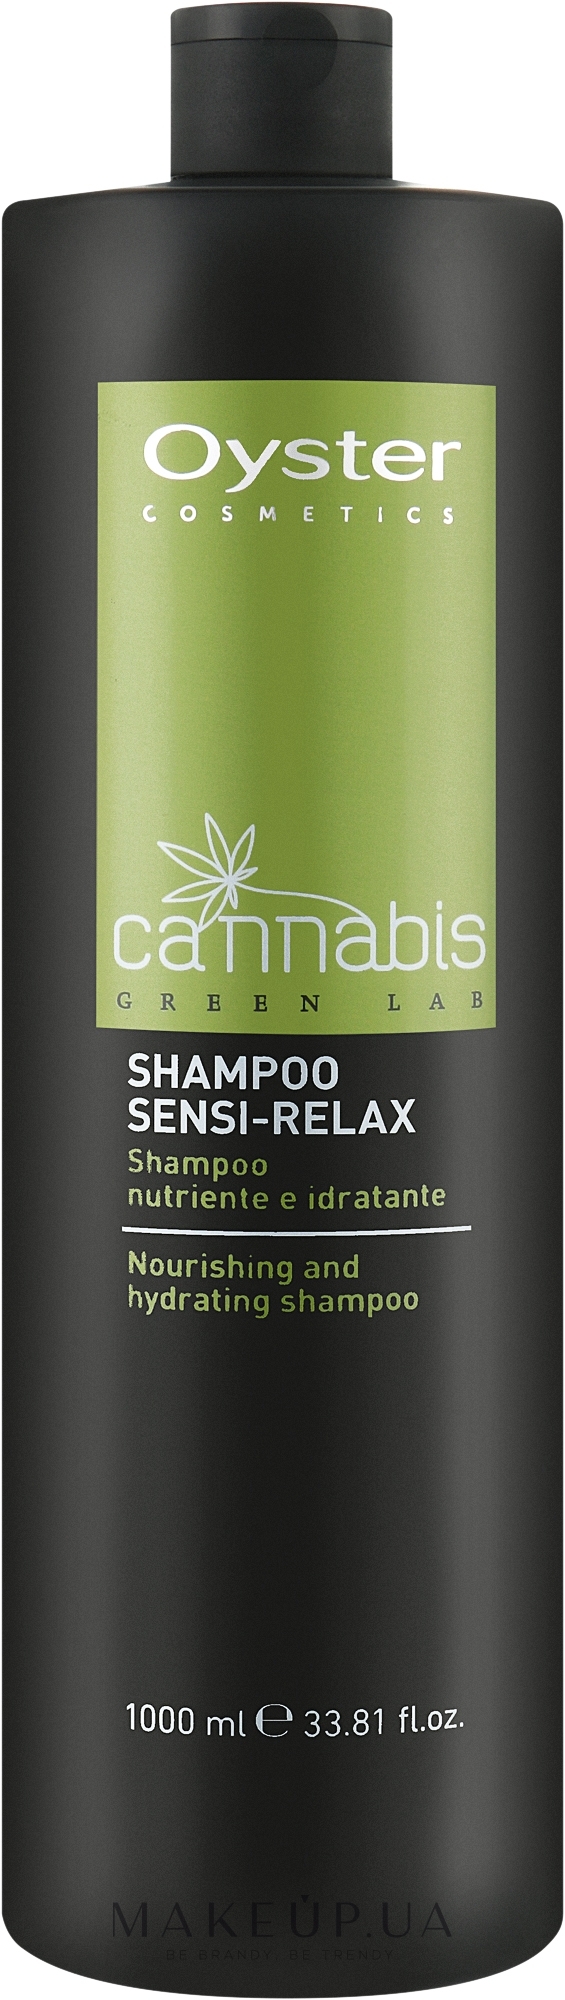 Шампунь для волос с каннабисом без SLES и парабенов - Oyster Cosmetics Cannabis Green Lab Shampoo Sensi-Relax — фото 1000ml